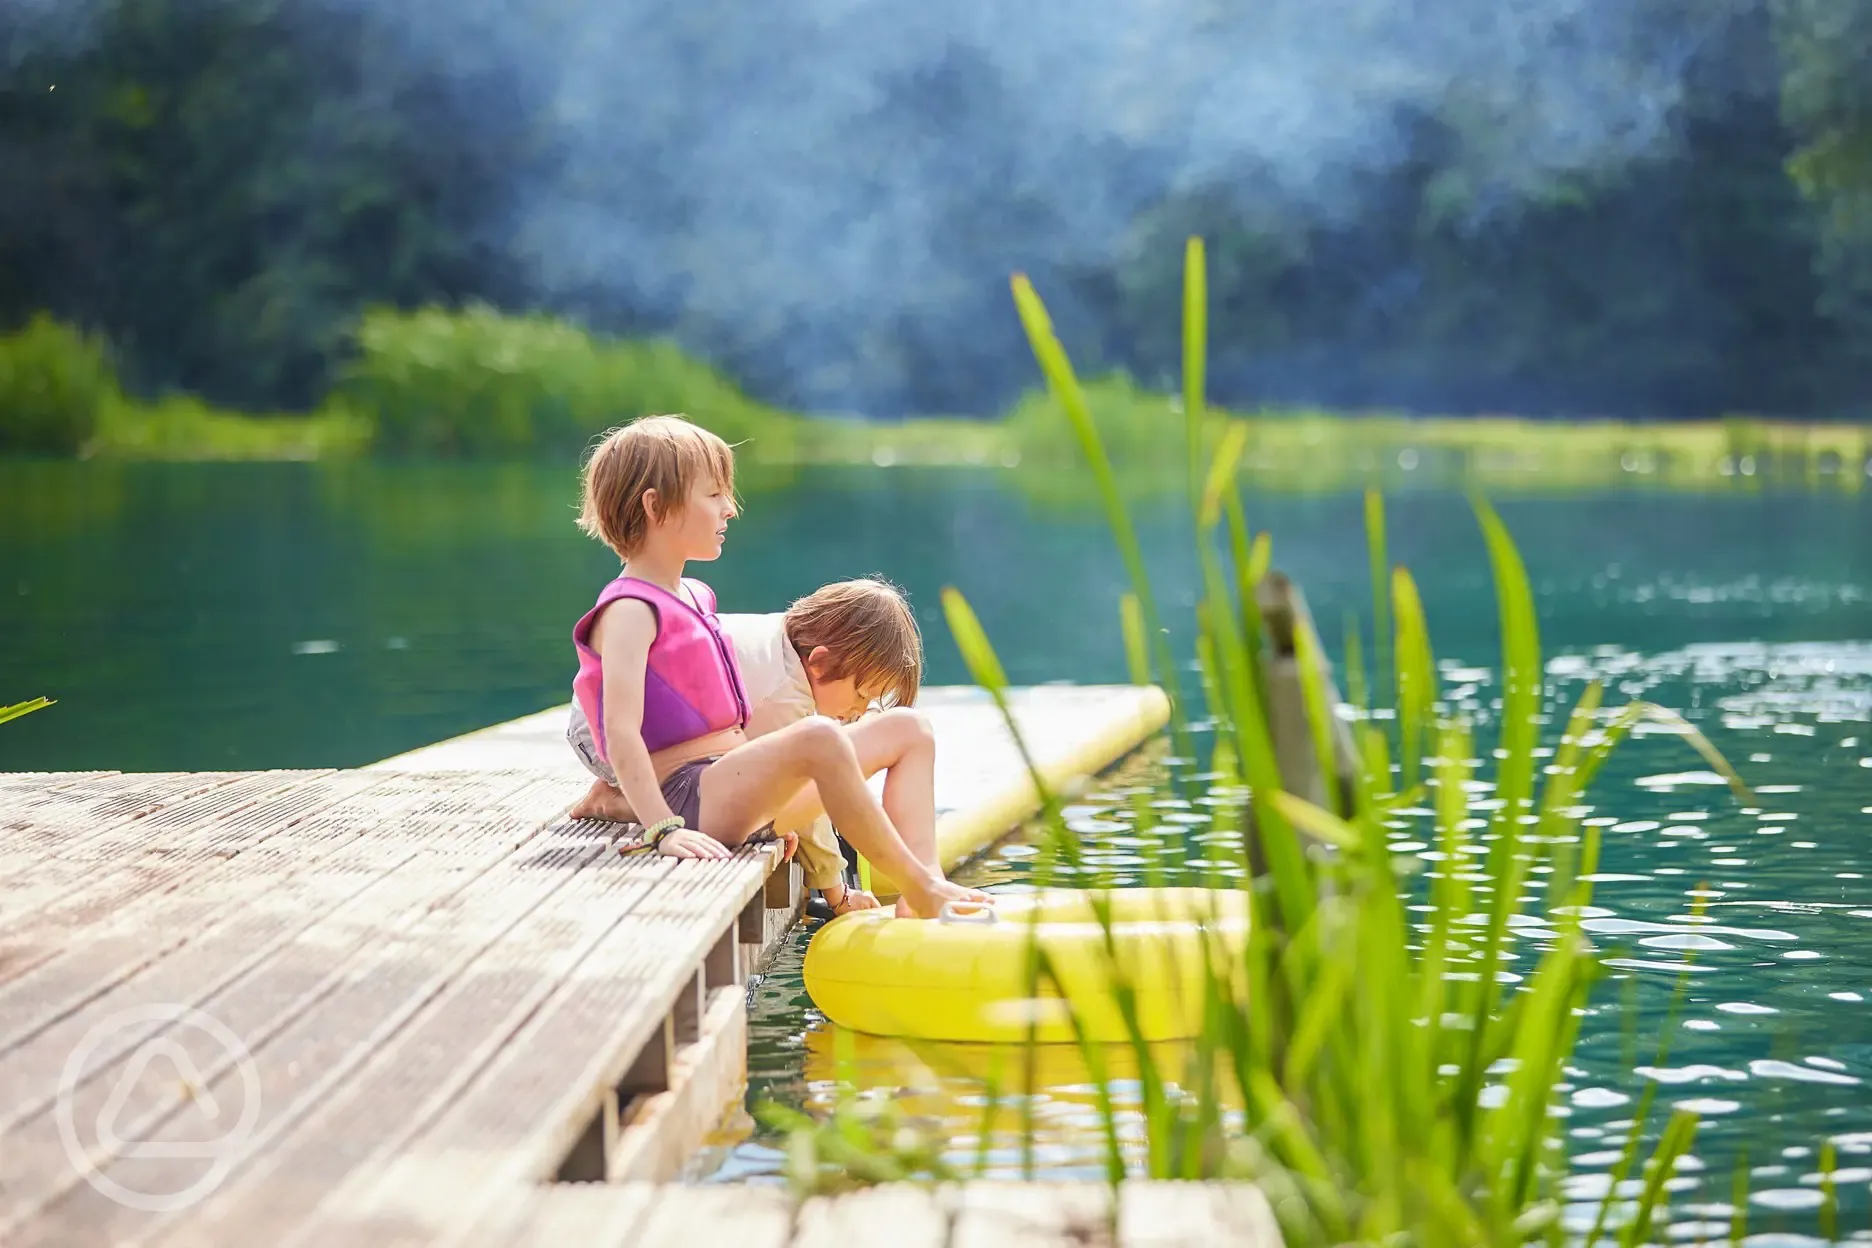 Children at the lake